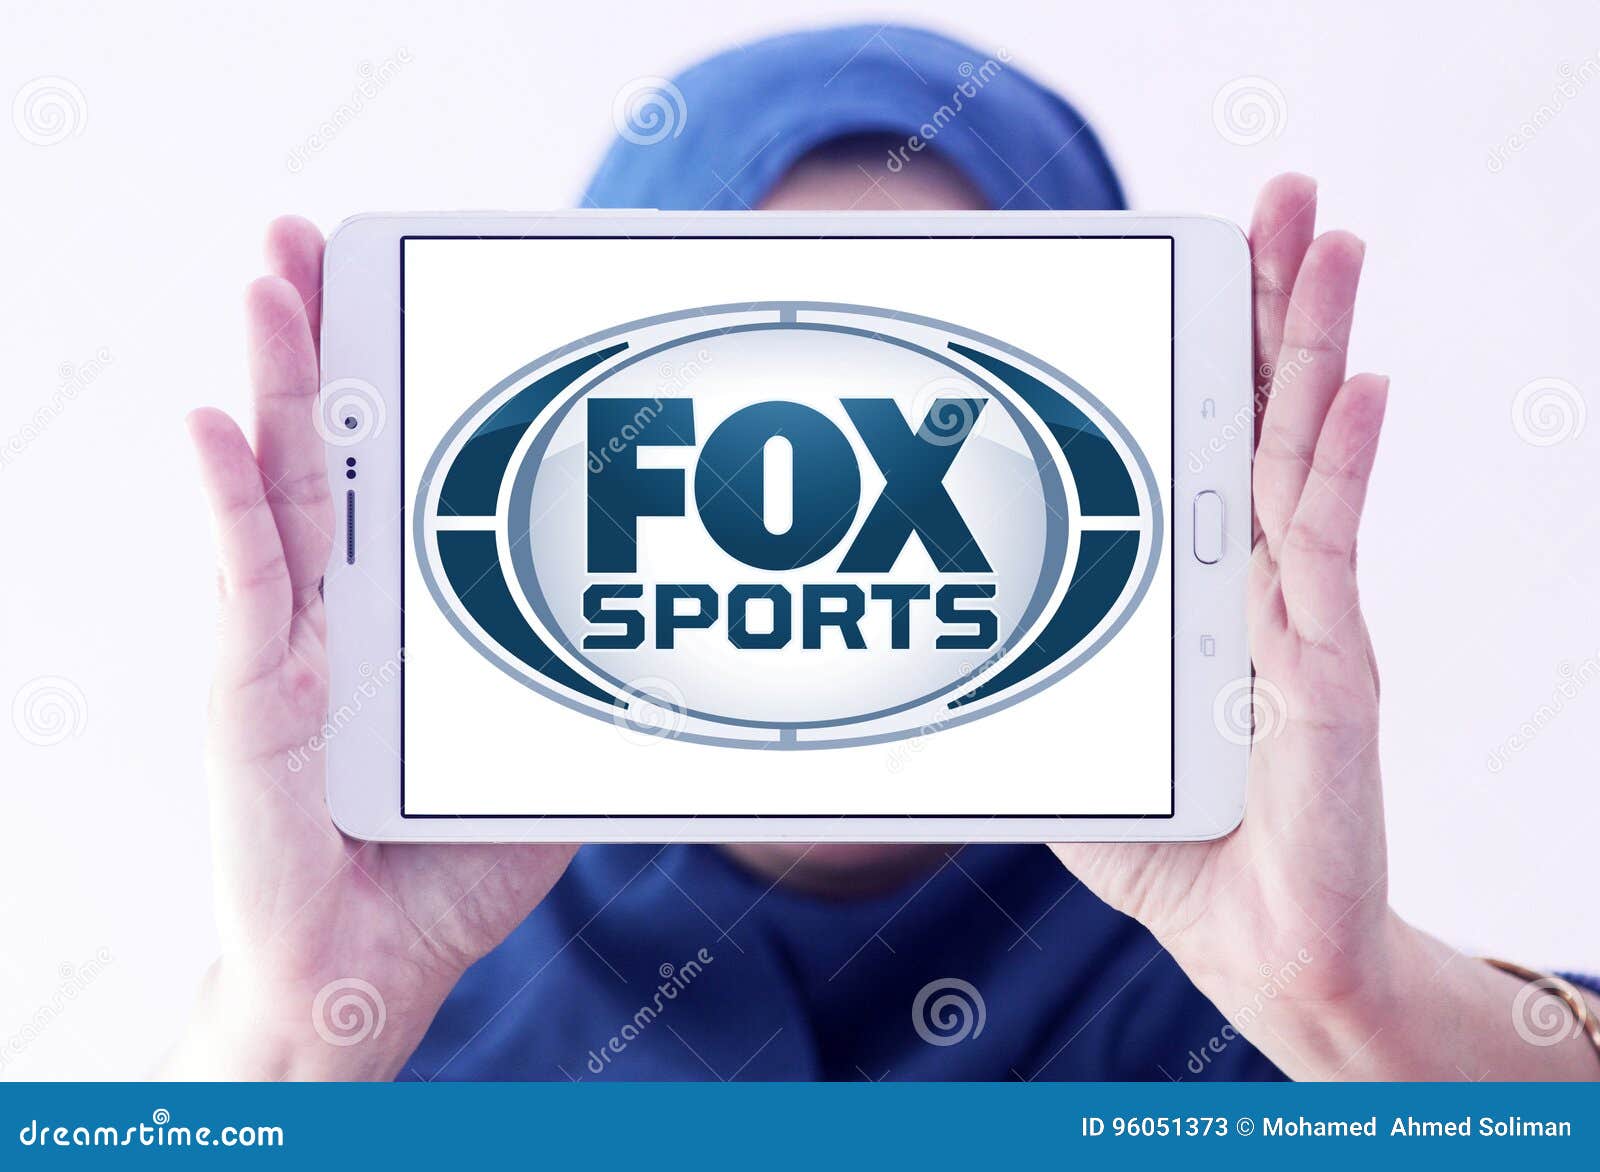 Fox sports logo editorial stock photo